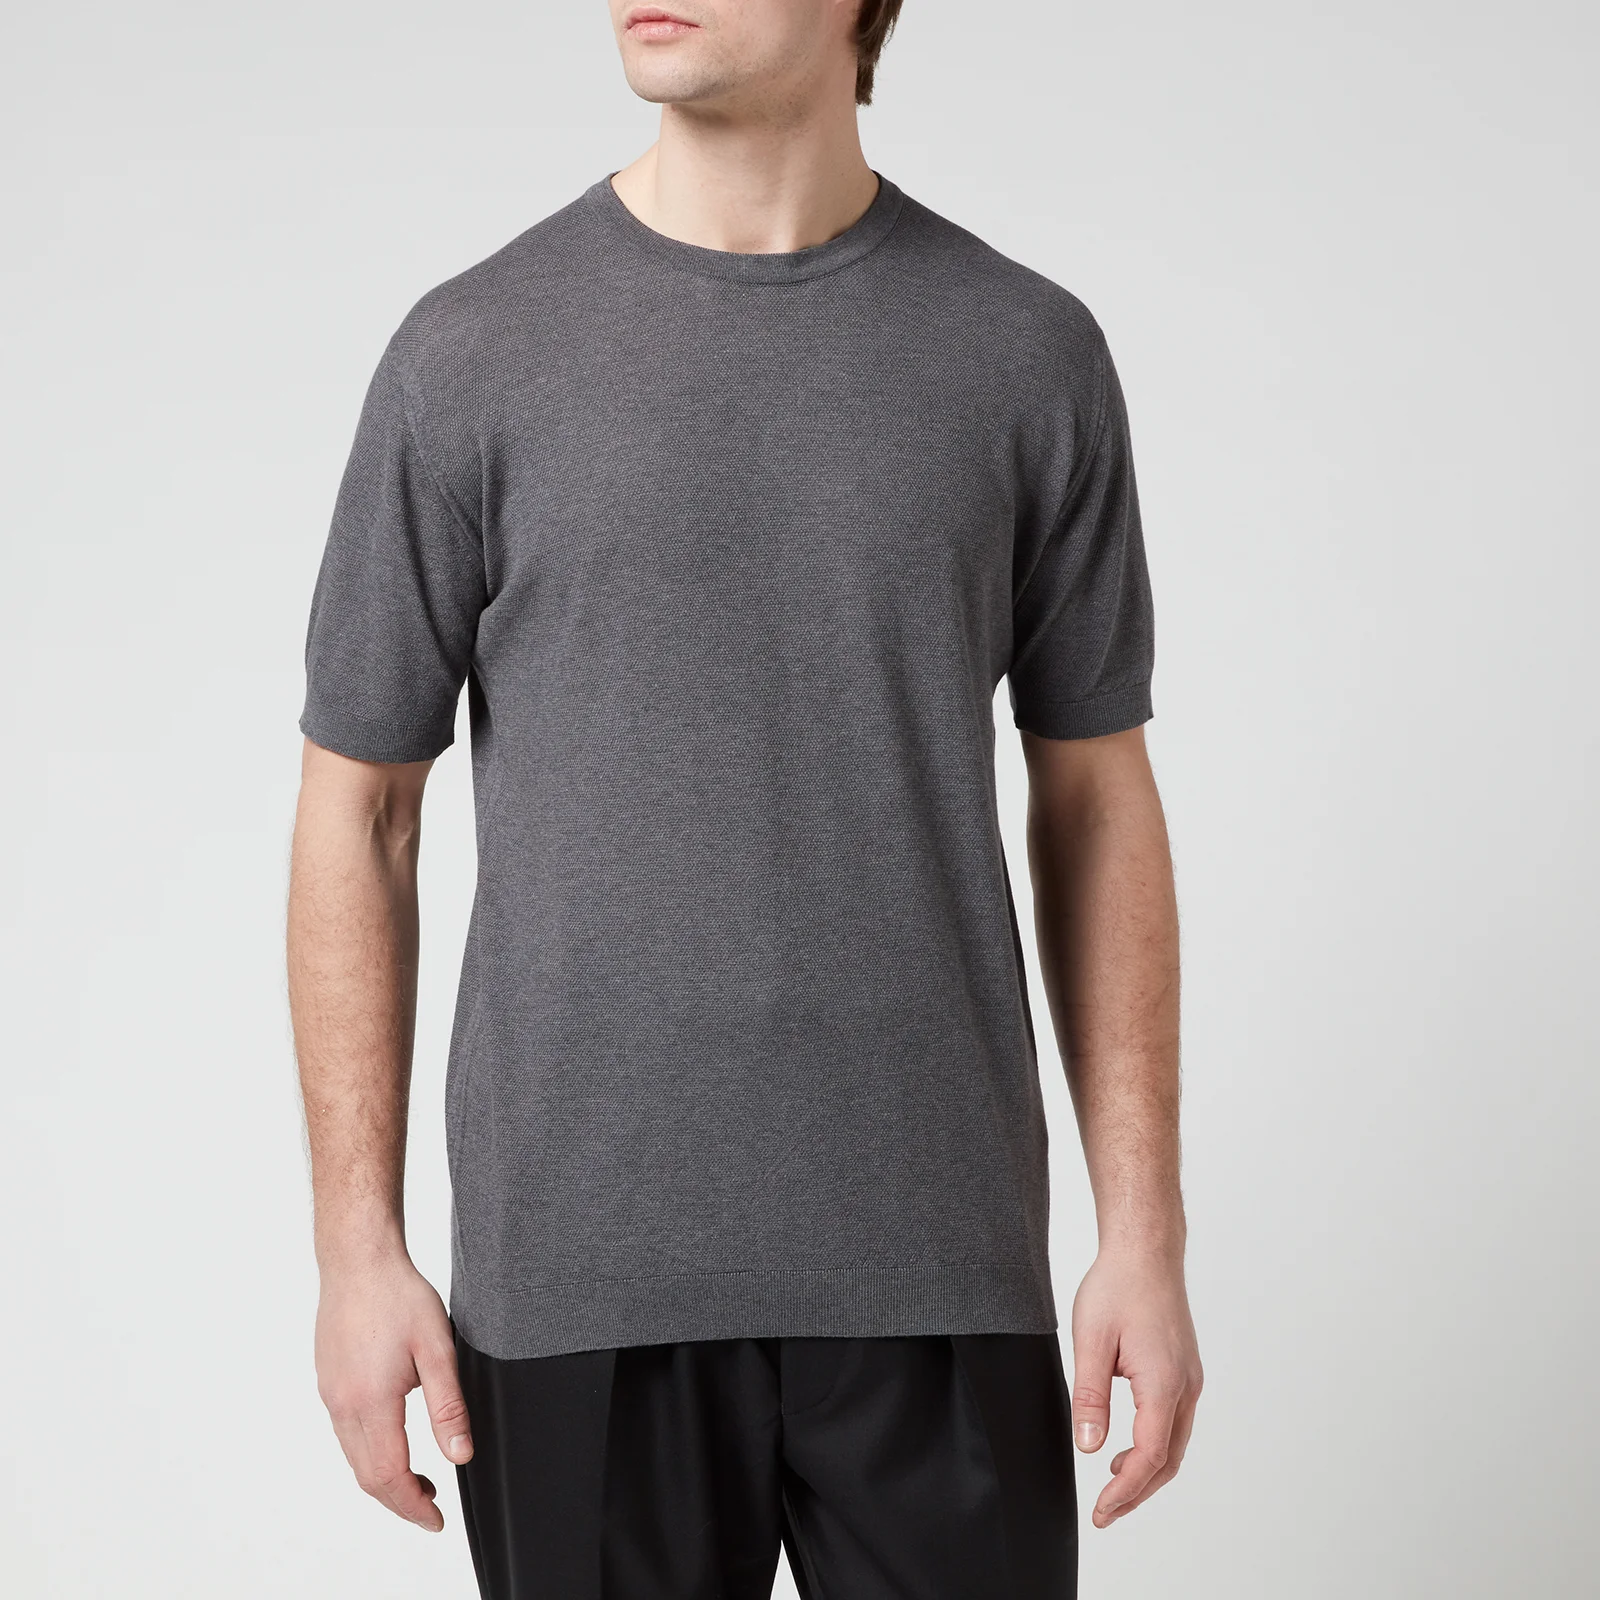 John Smedley Men's Park Pique T-Shirt - Charcoal Image 1